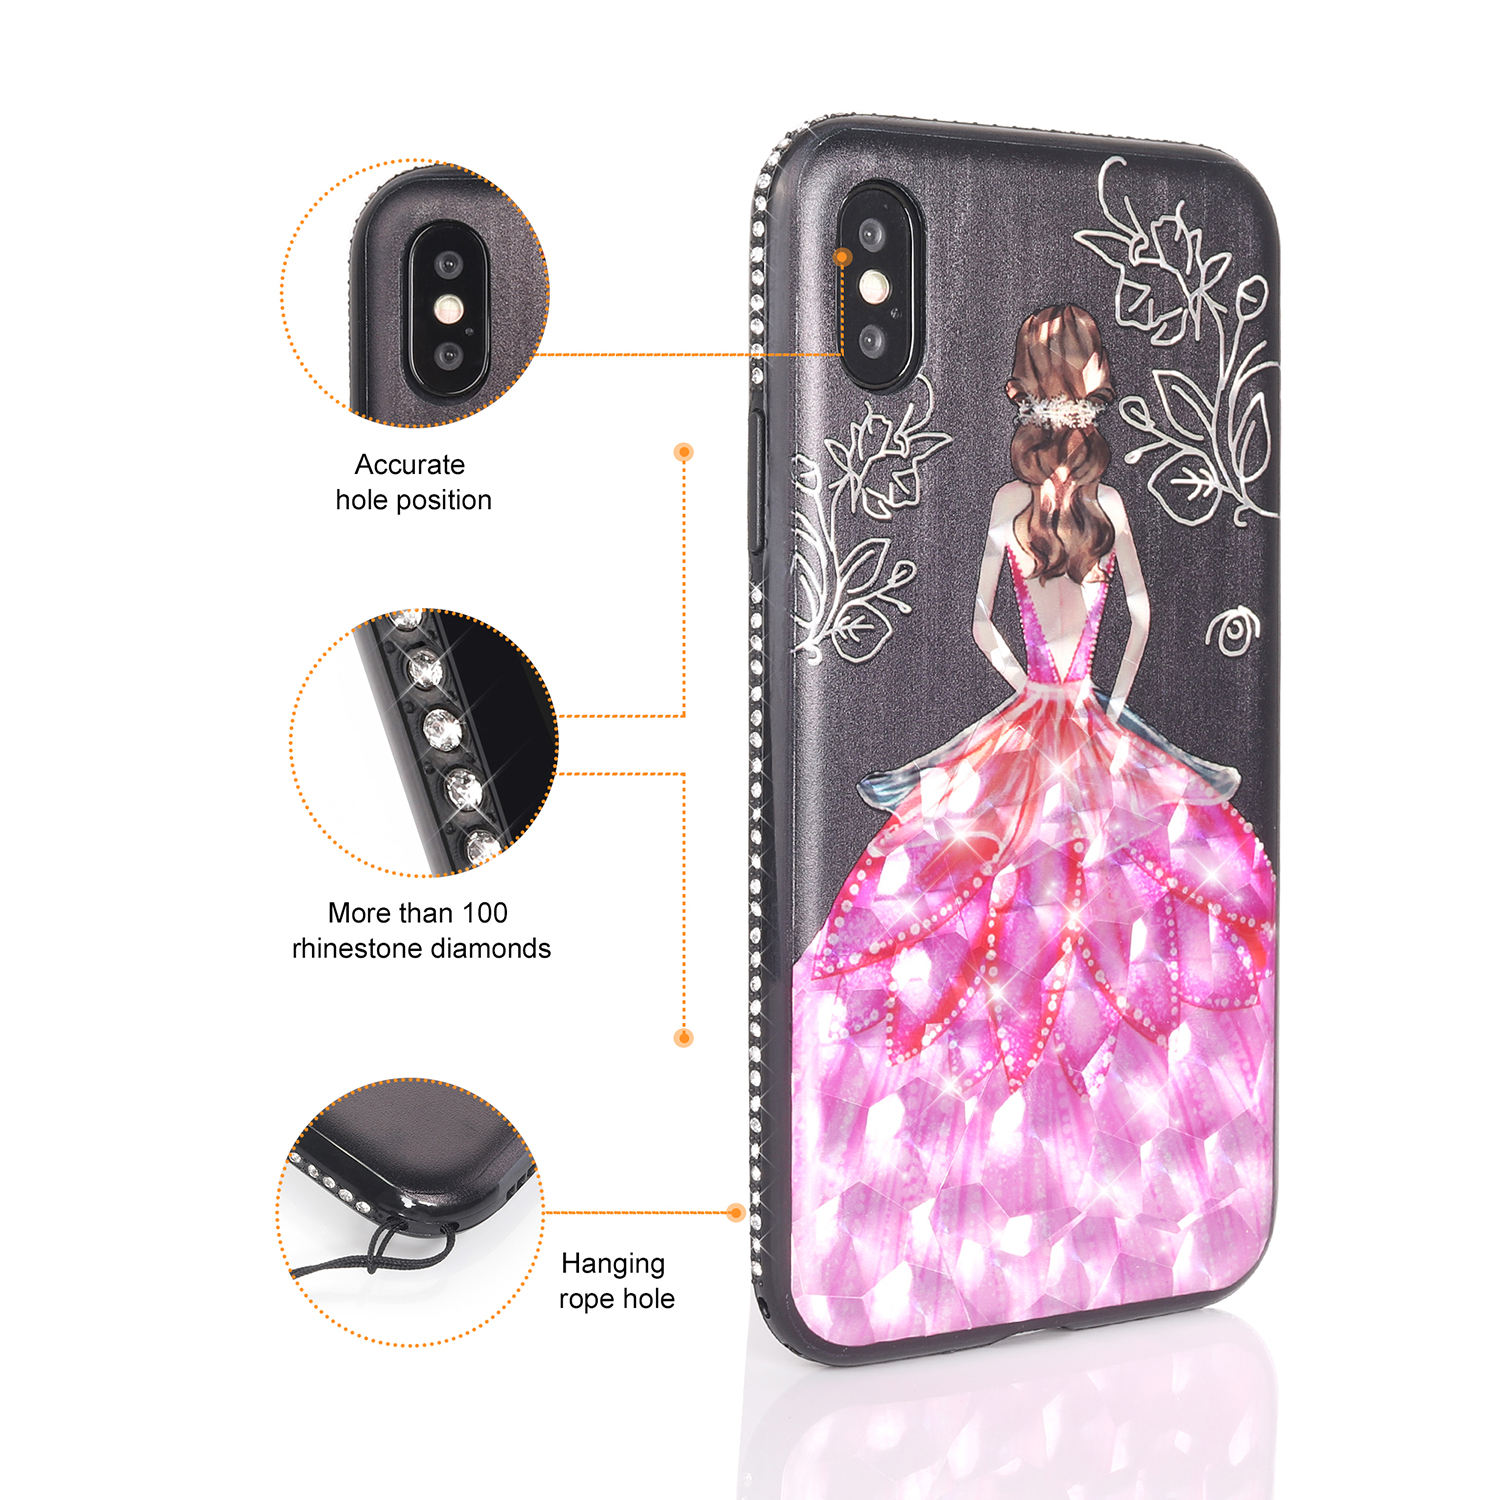 Bakeey-3D-Painting-Protective-Case-For-iPhone-X88-Plus77-Plus6s-Plus6-Plus6s6-Pink-Dress-Glitter-Bli-1305757-3